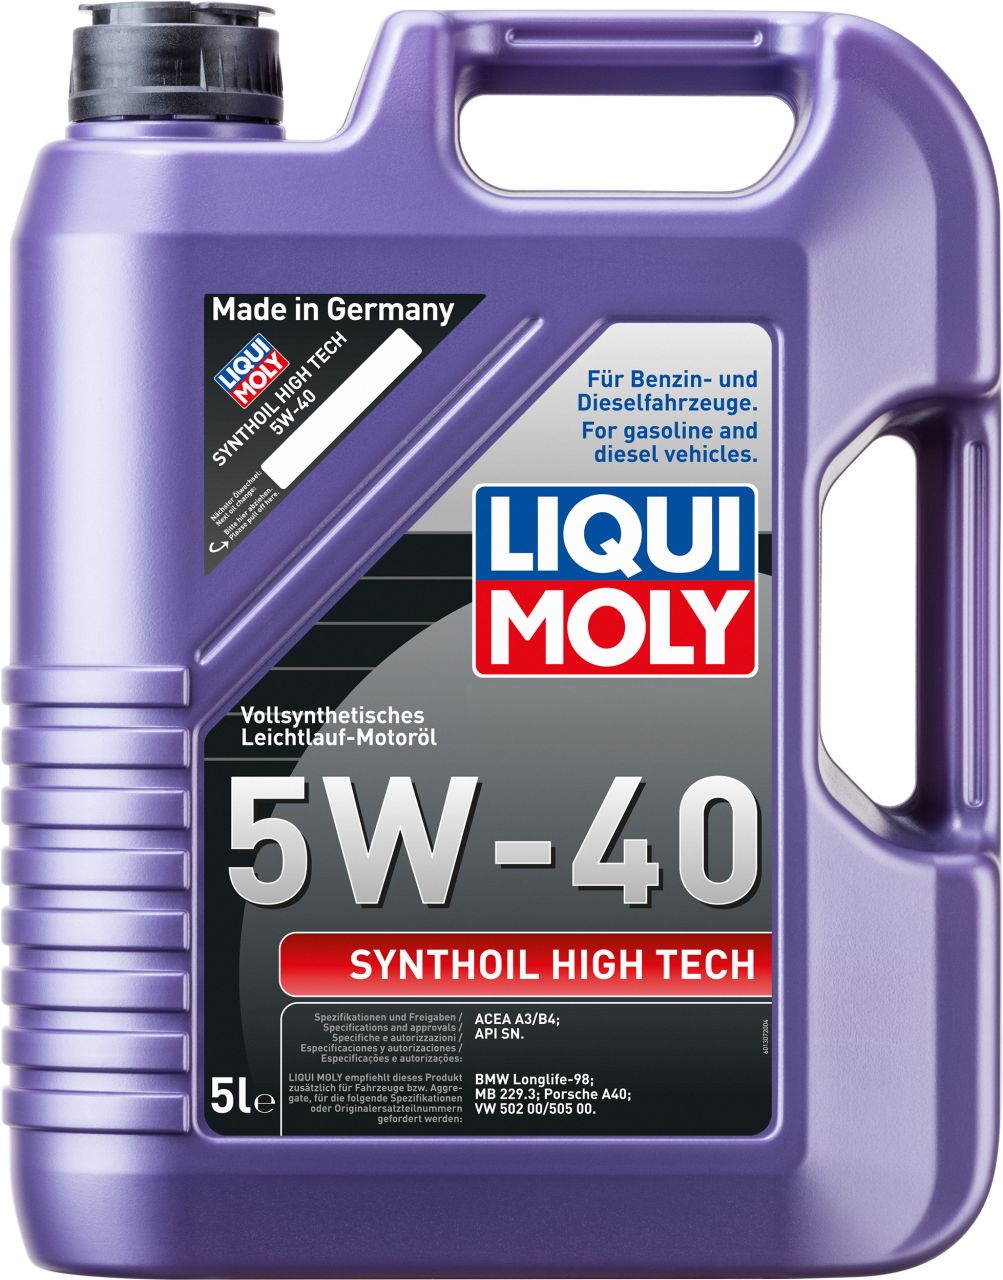 Liqui Moly Motoröl Synthoil High Tech 5W-40 5 L von Liqui Moly